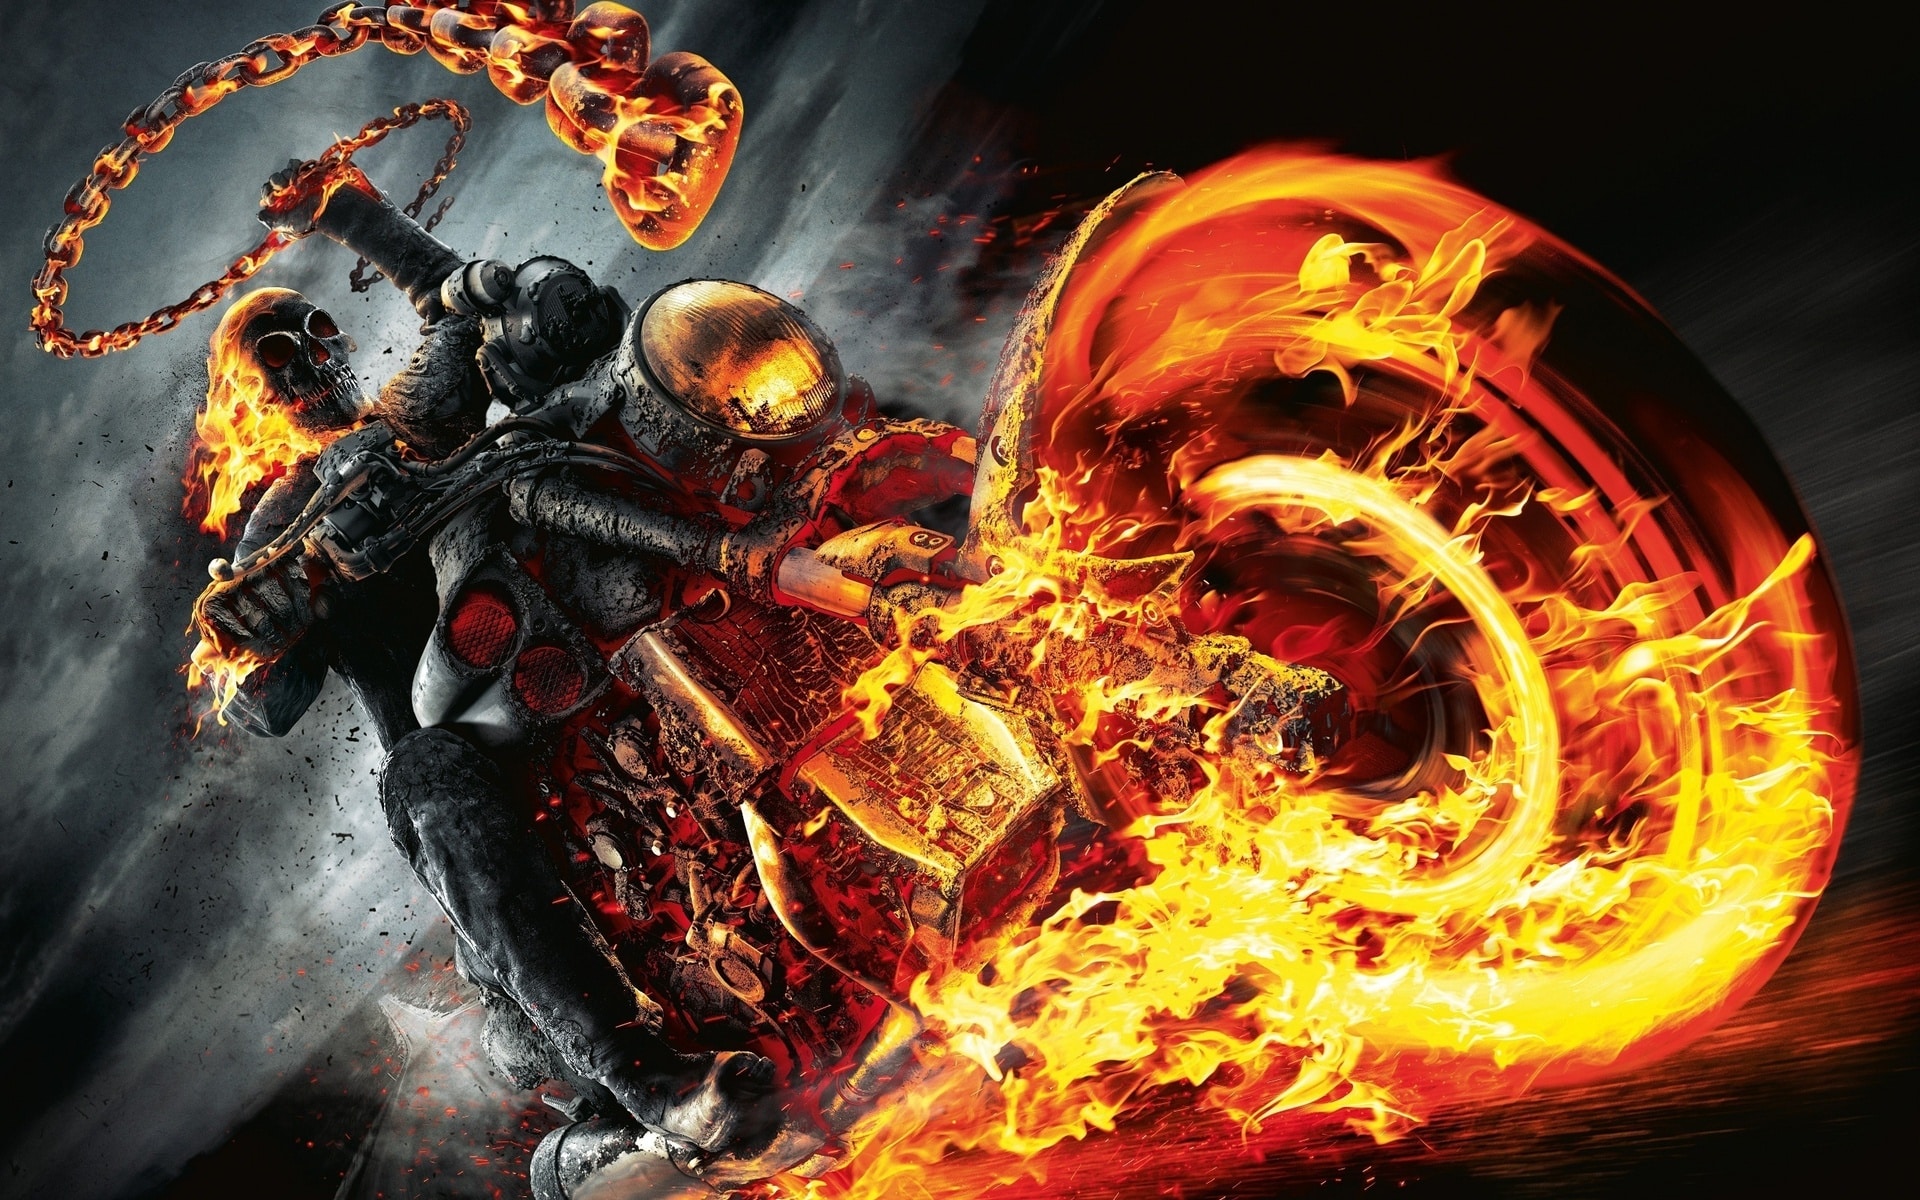 Underrated Film: Ghost Rider: Spirit of Vengeance (2012)